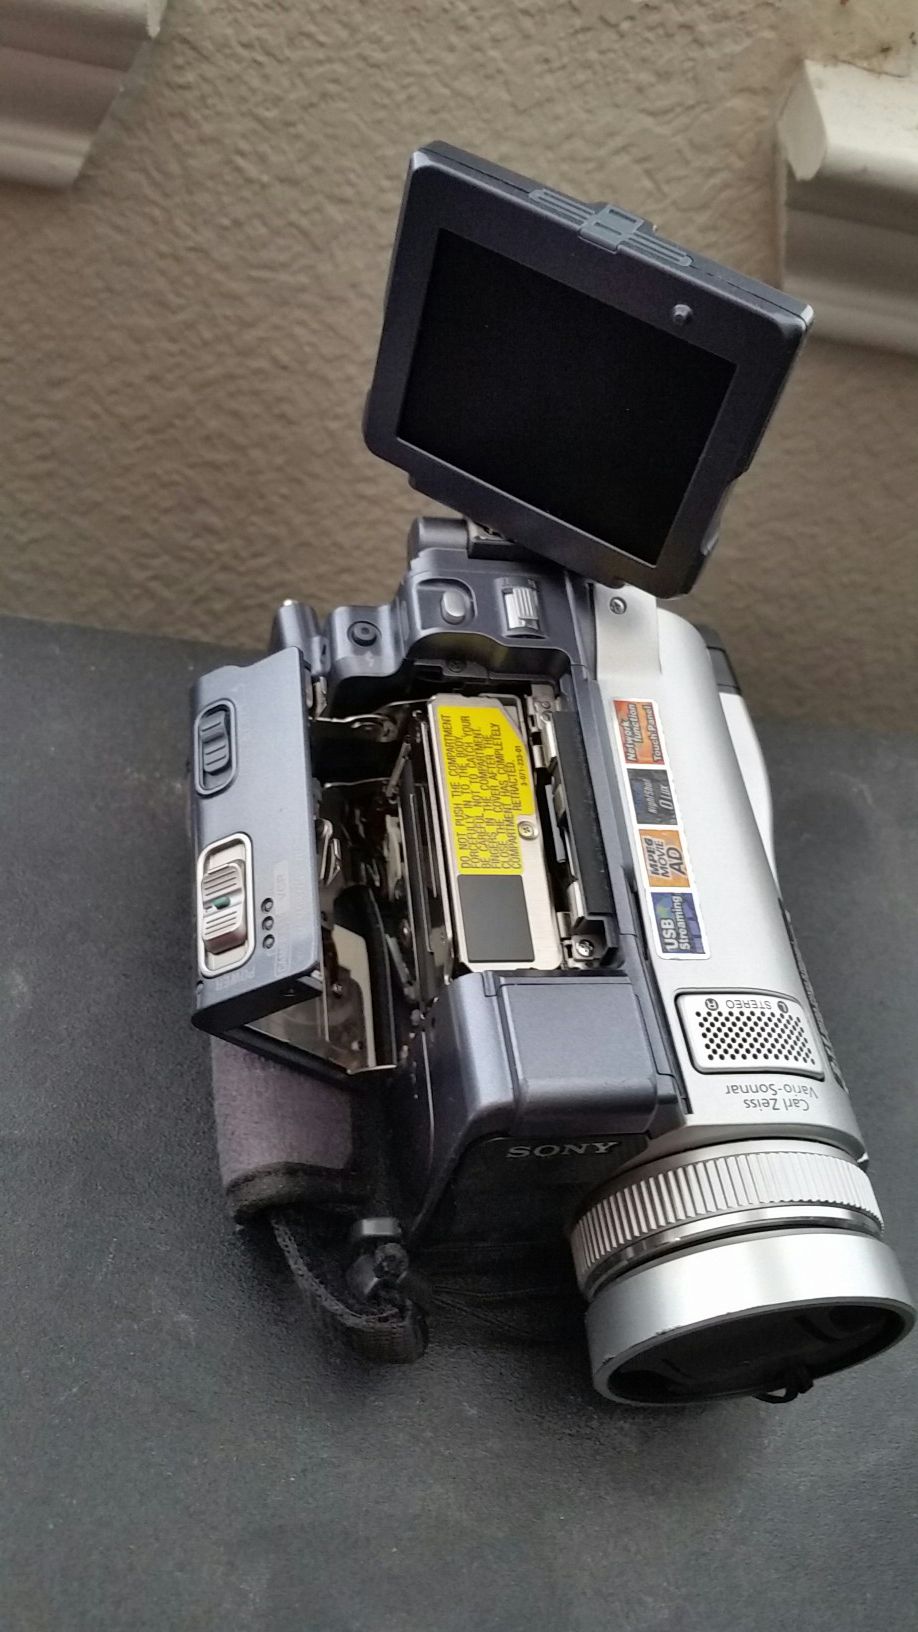 Sony microtape camcorder